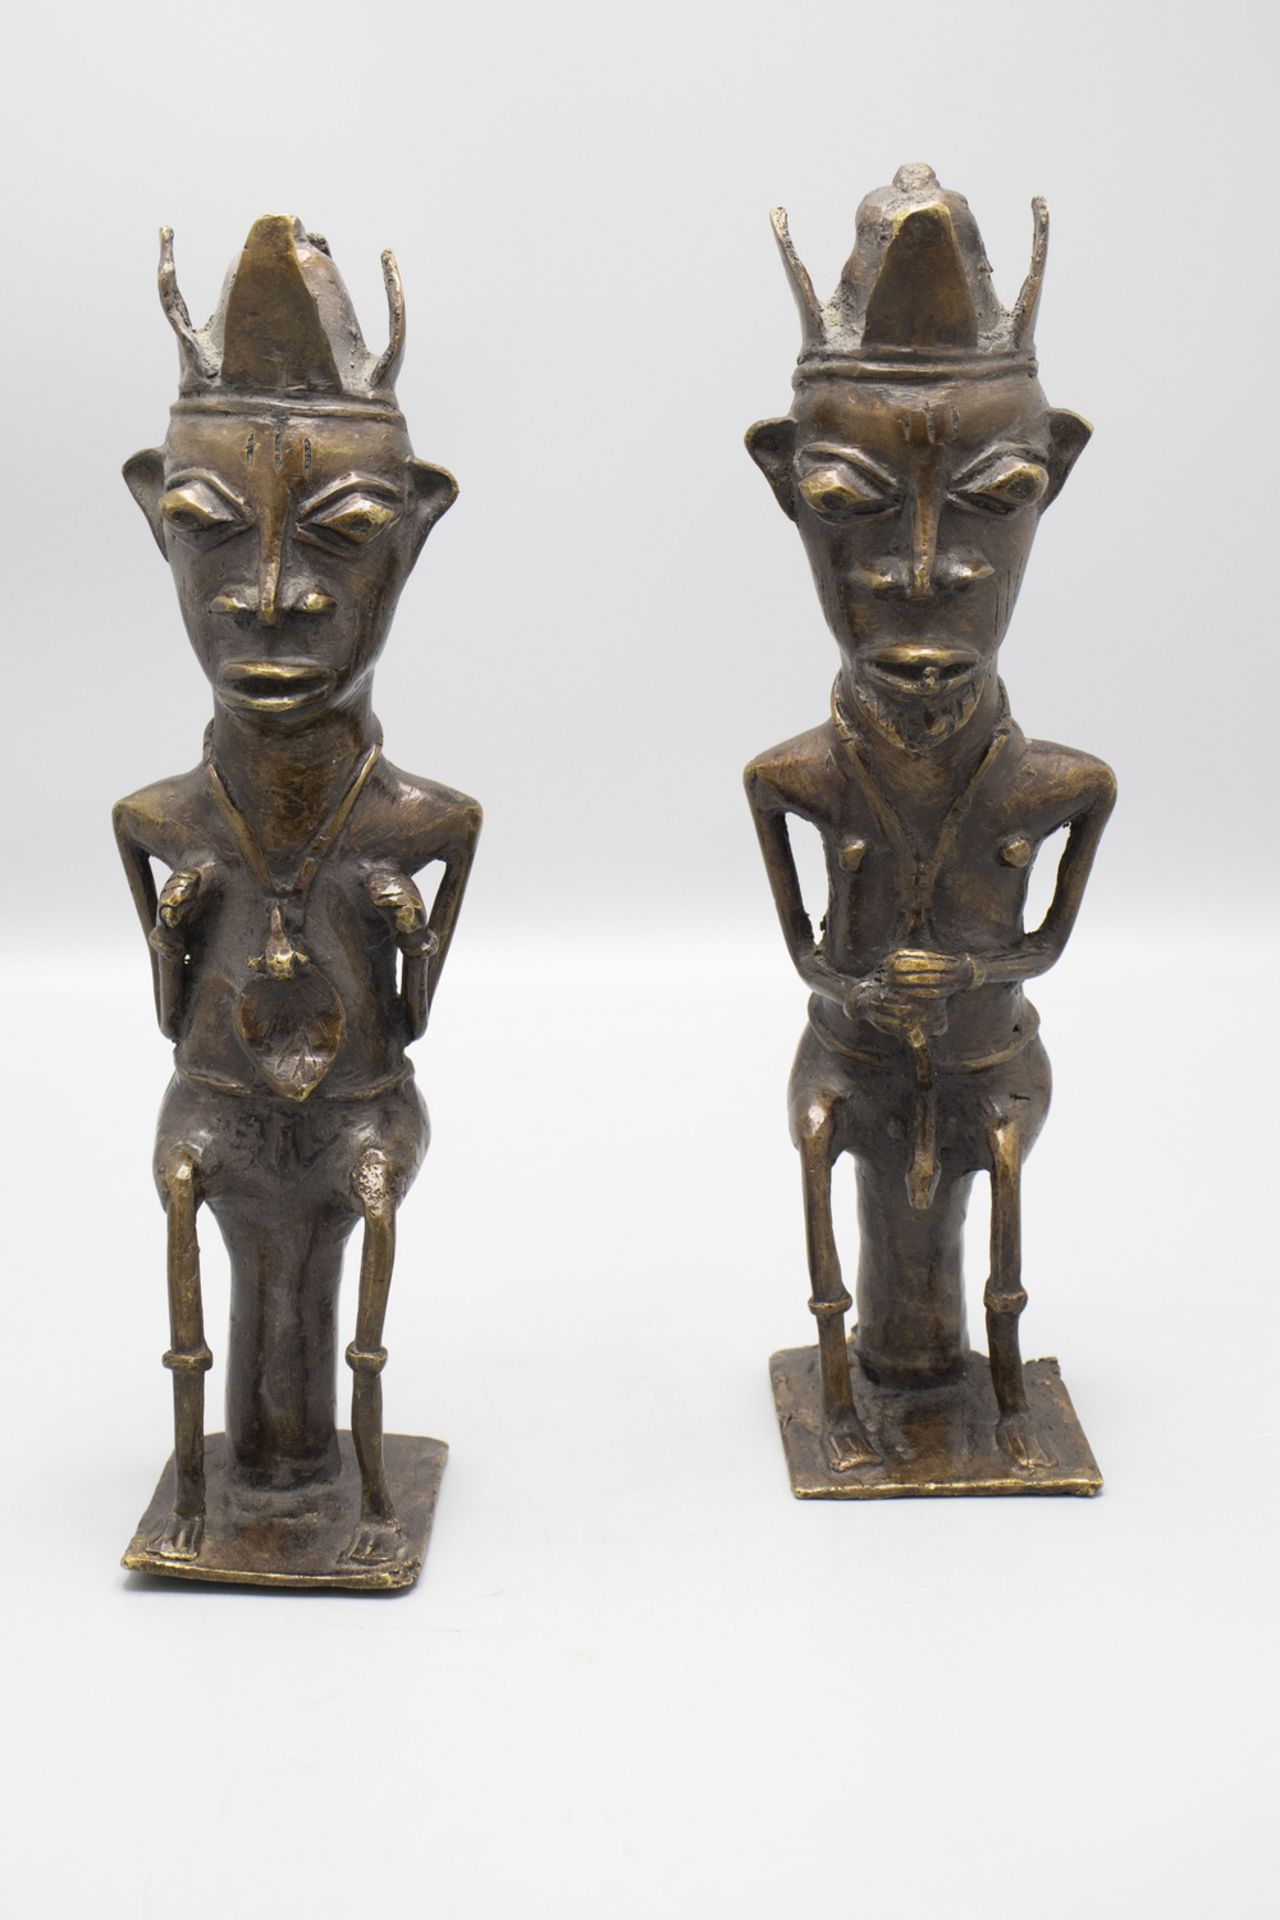 Bronze Ogboni Kultfigurenpaar / Two bronze Ogboni cult figure pair, Yoruba, Nigeria